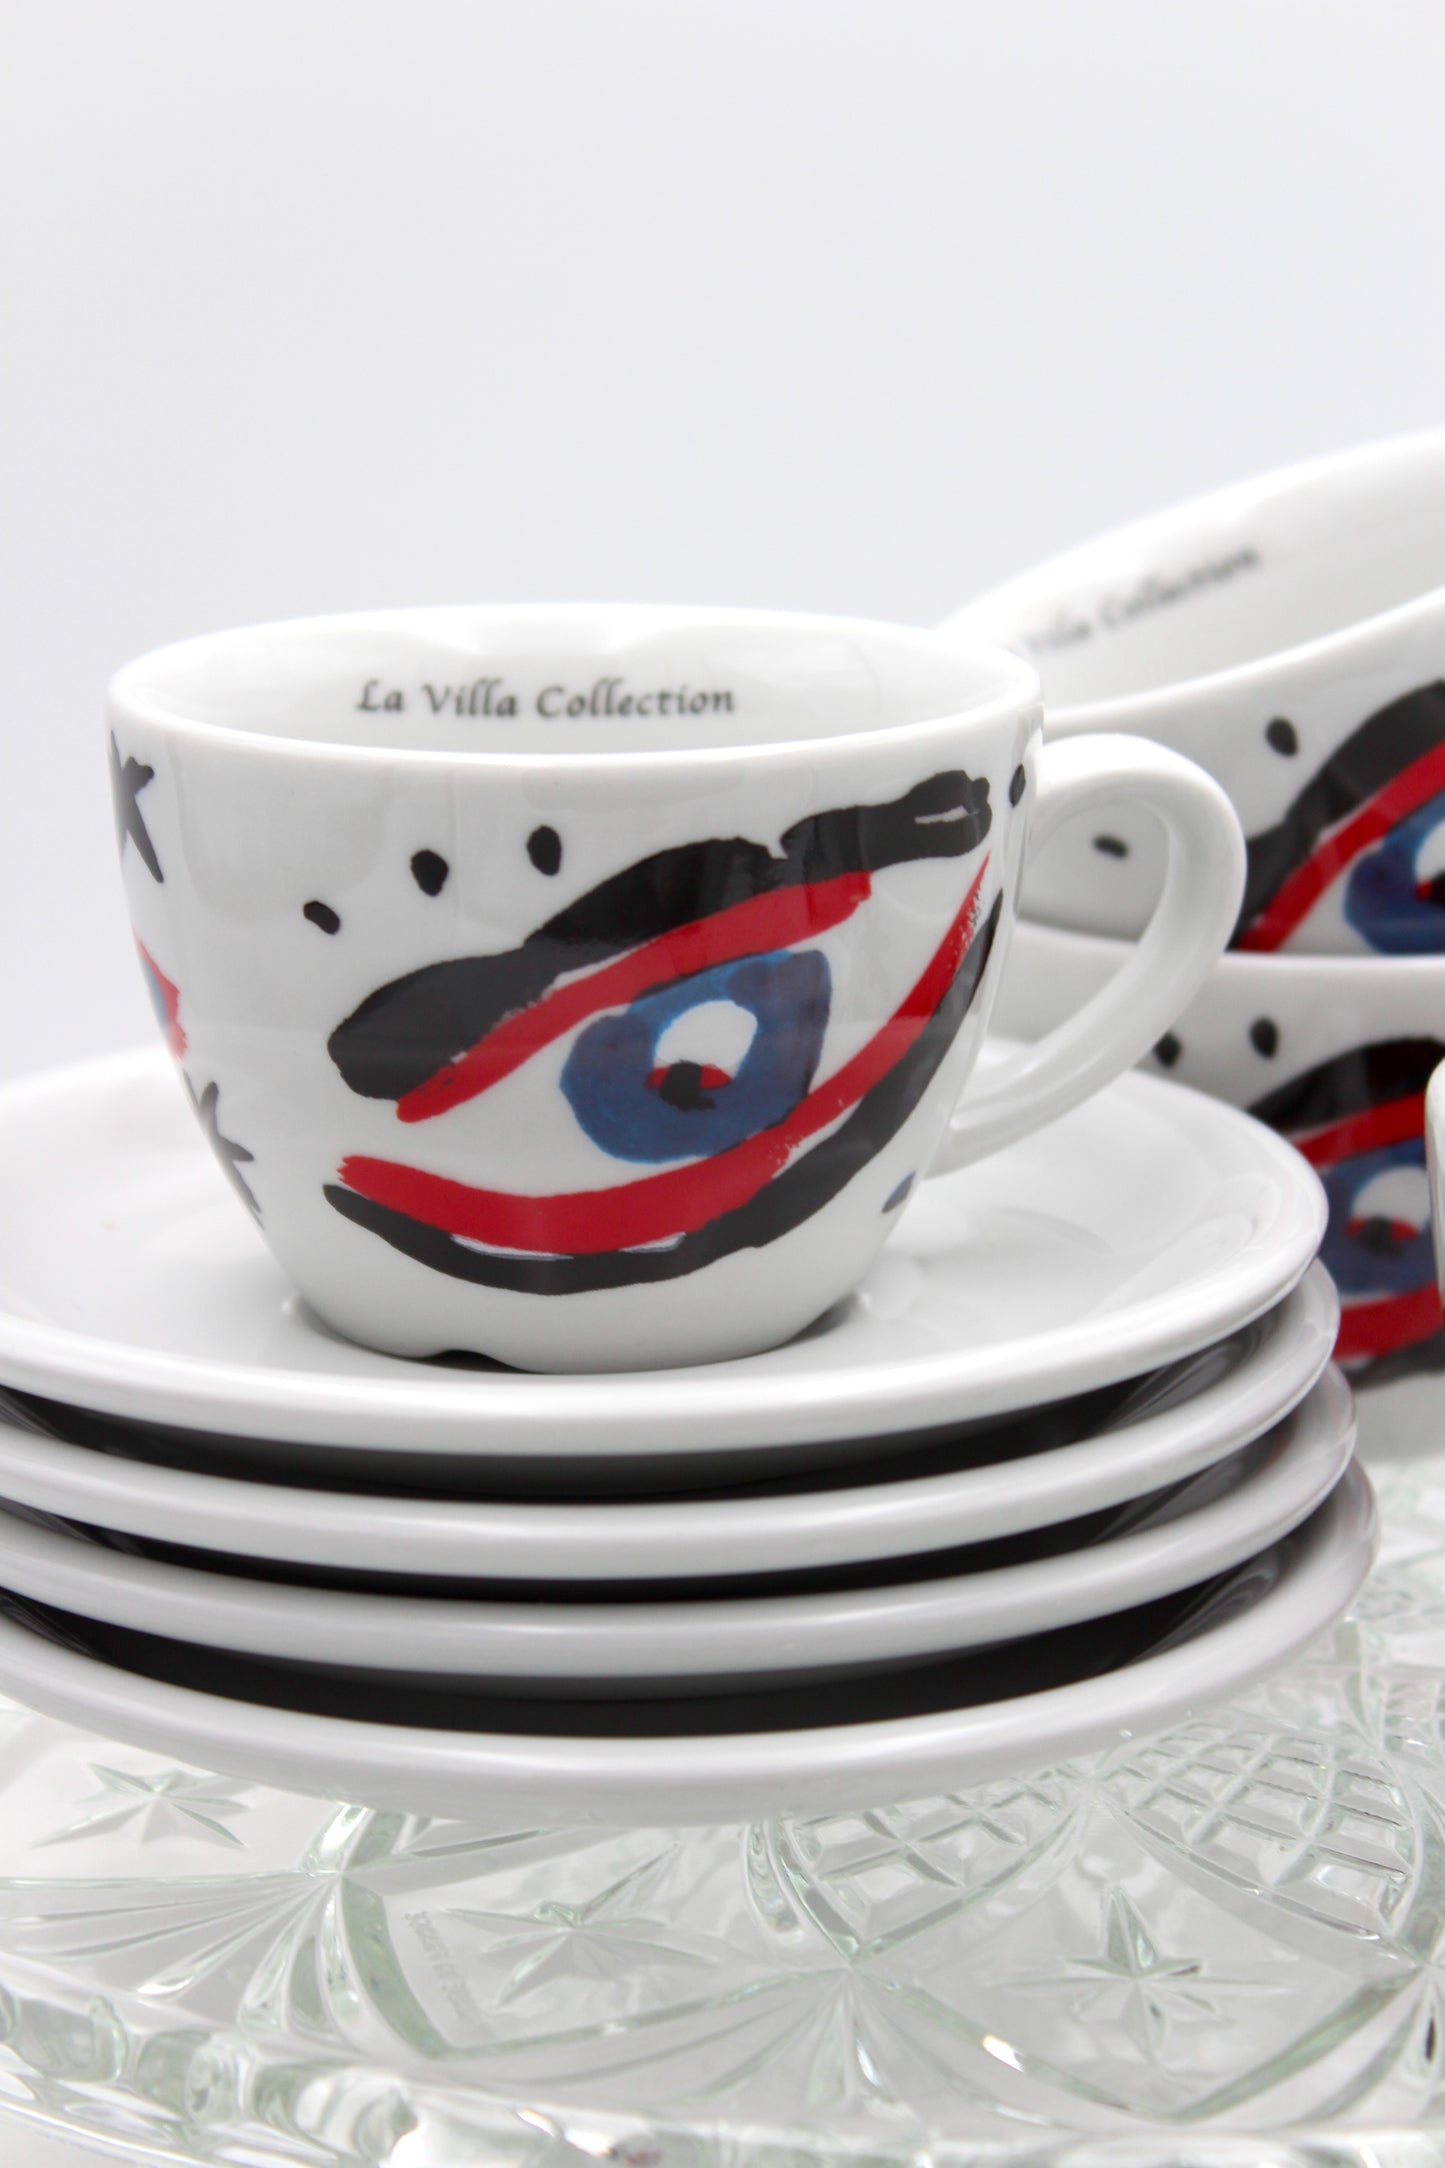 La Villa Collection - Cappuccino-Tassen, 4-tlg.